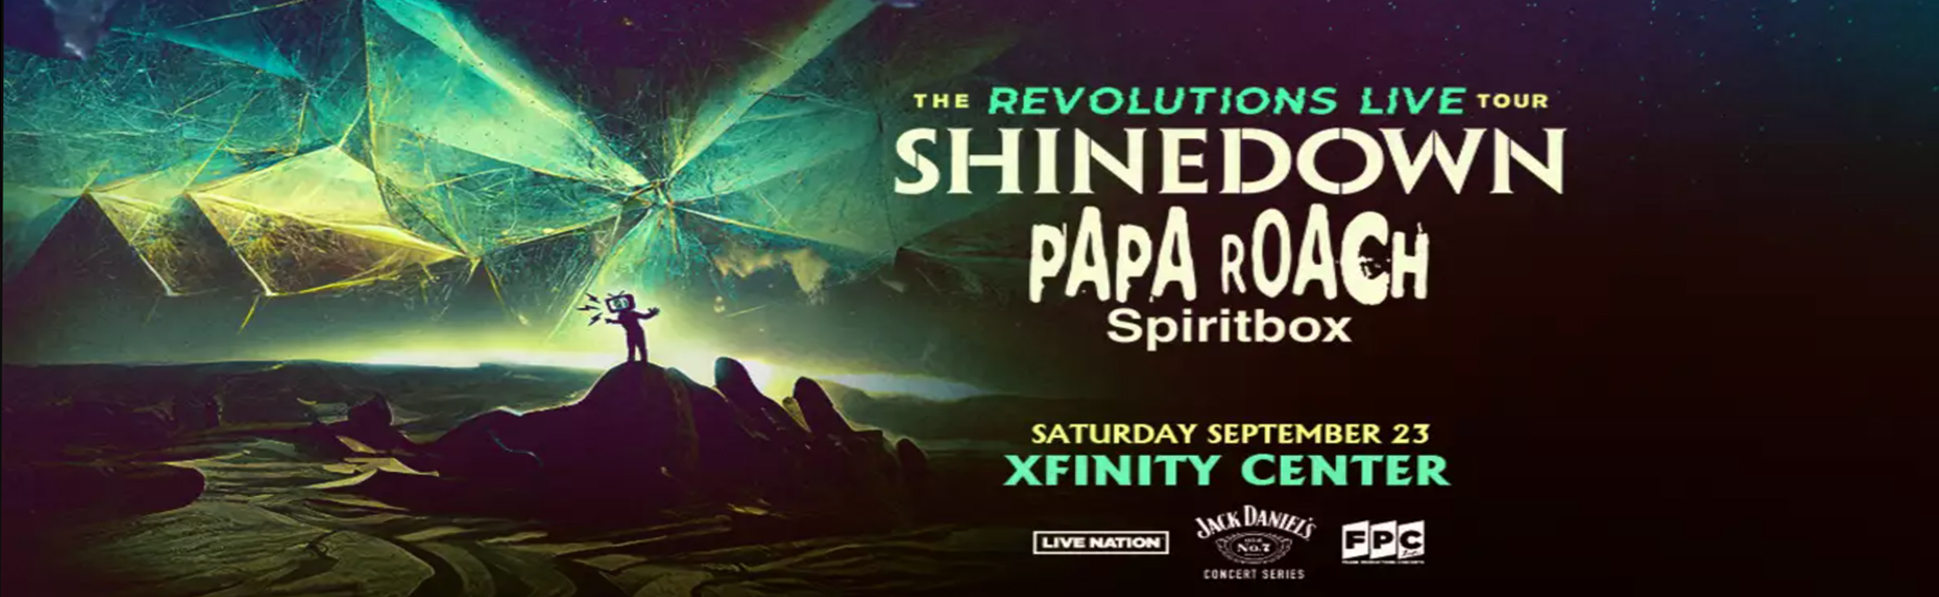 Shinedown, Papa Roach & Spiritbox at Xfinity Center